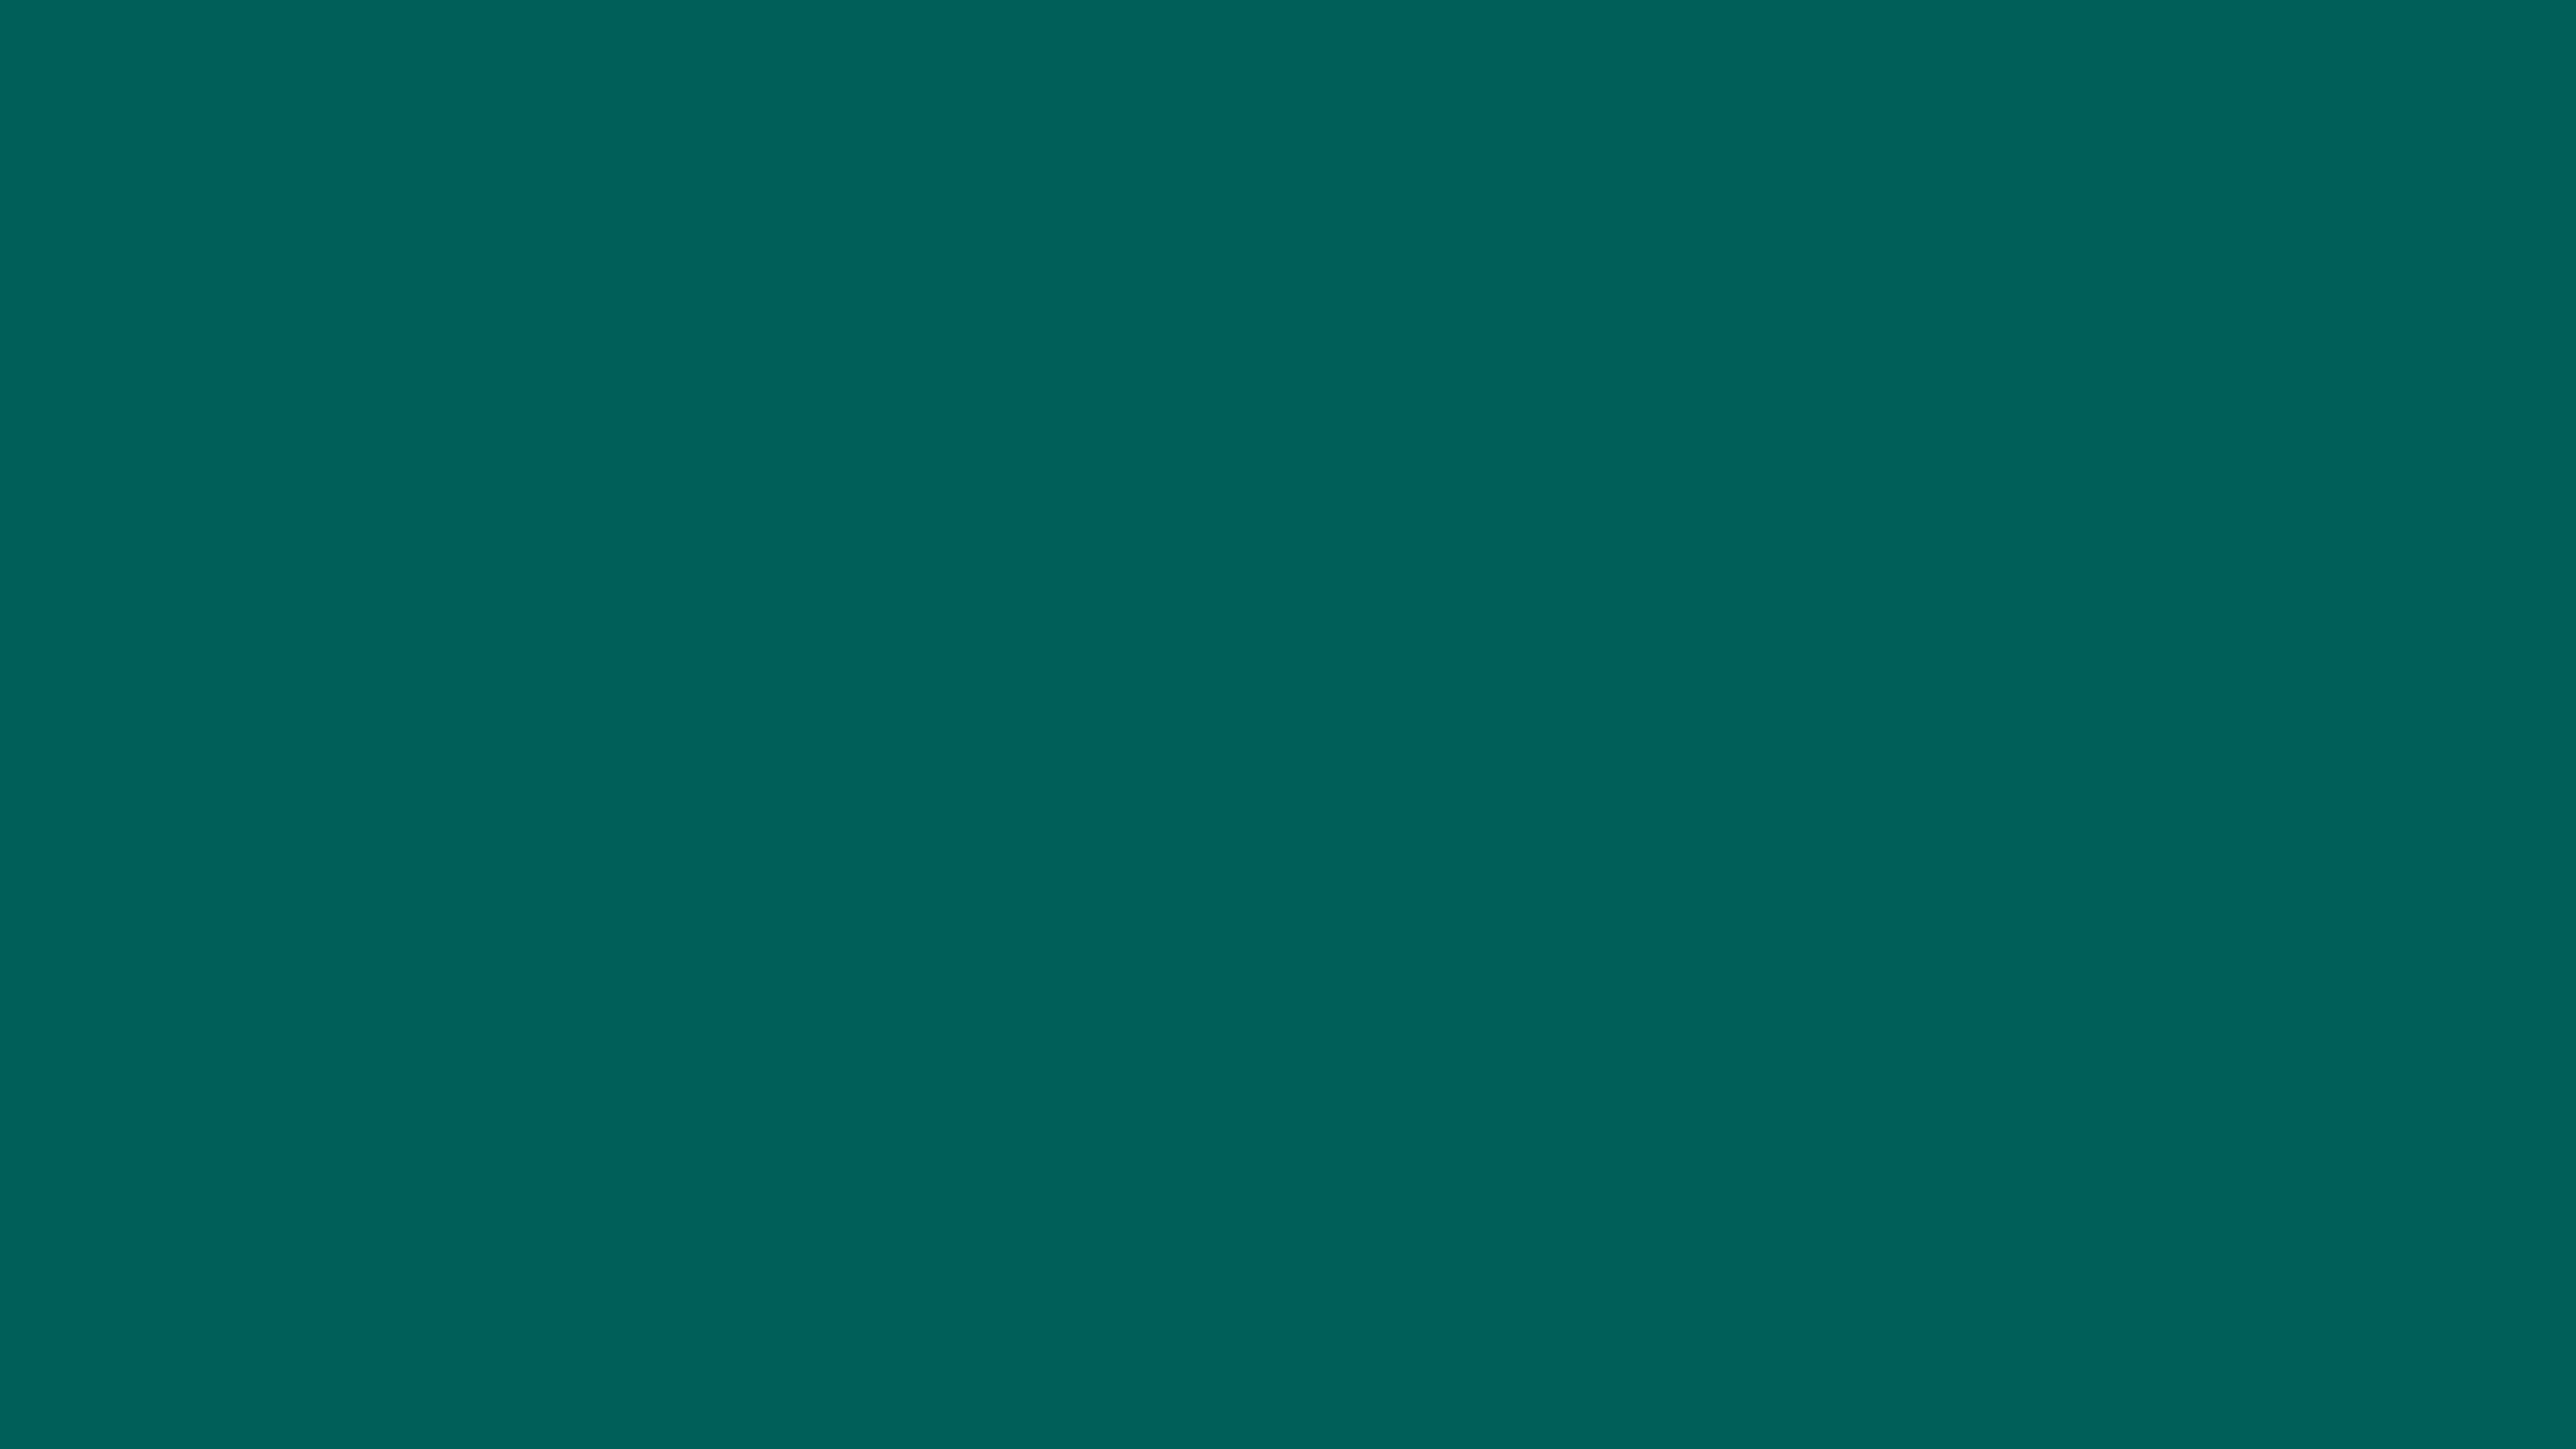 ICI alpine green - 3061 - #456943 color code hexadecimal - 64GY 12/295